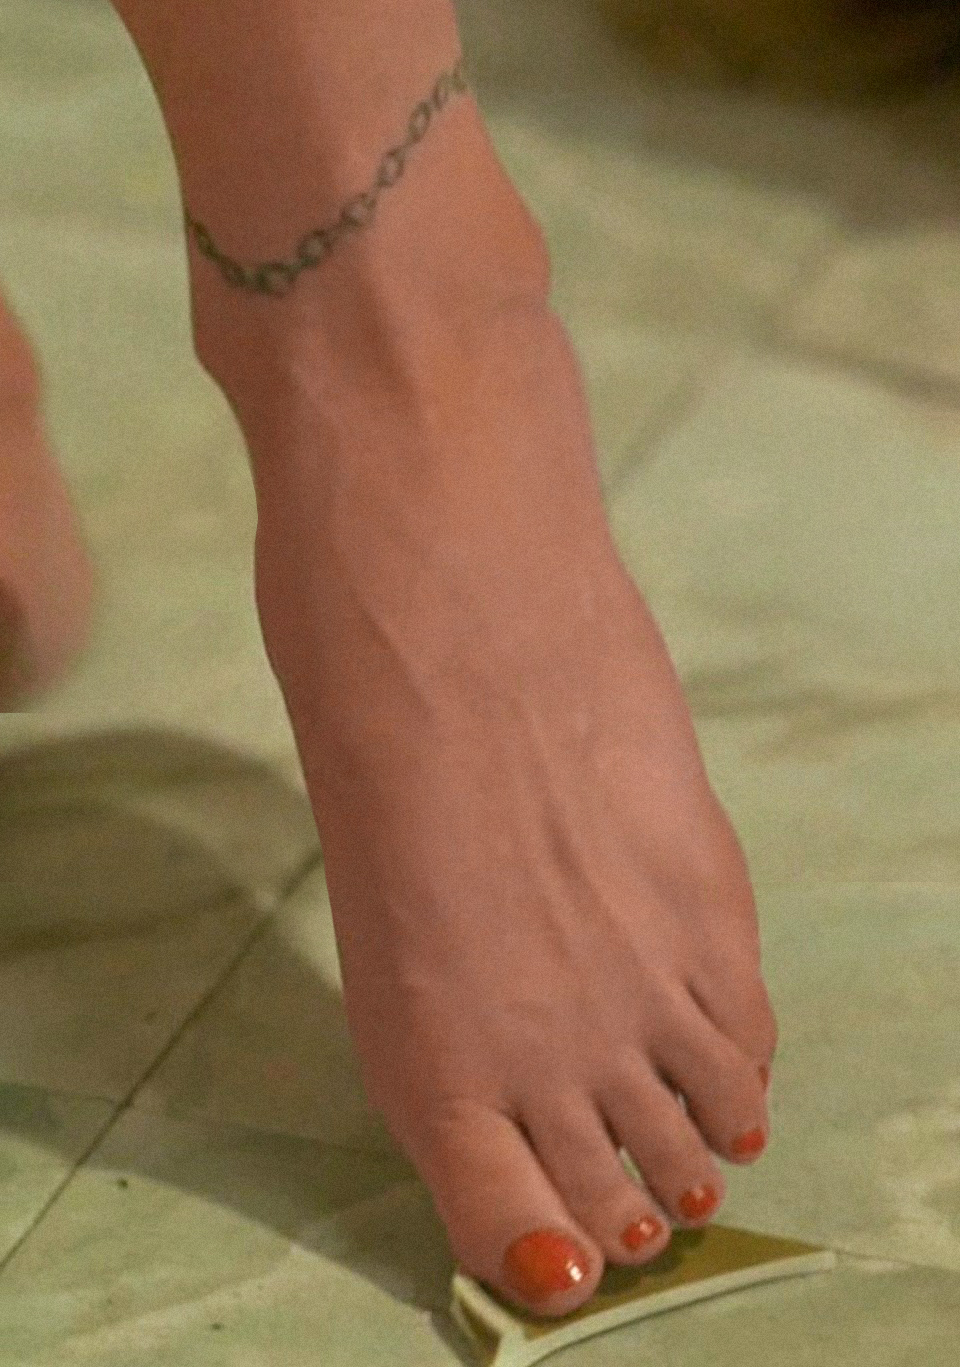 People who liked Deborah Kara Unger's feet, also liked.